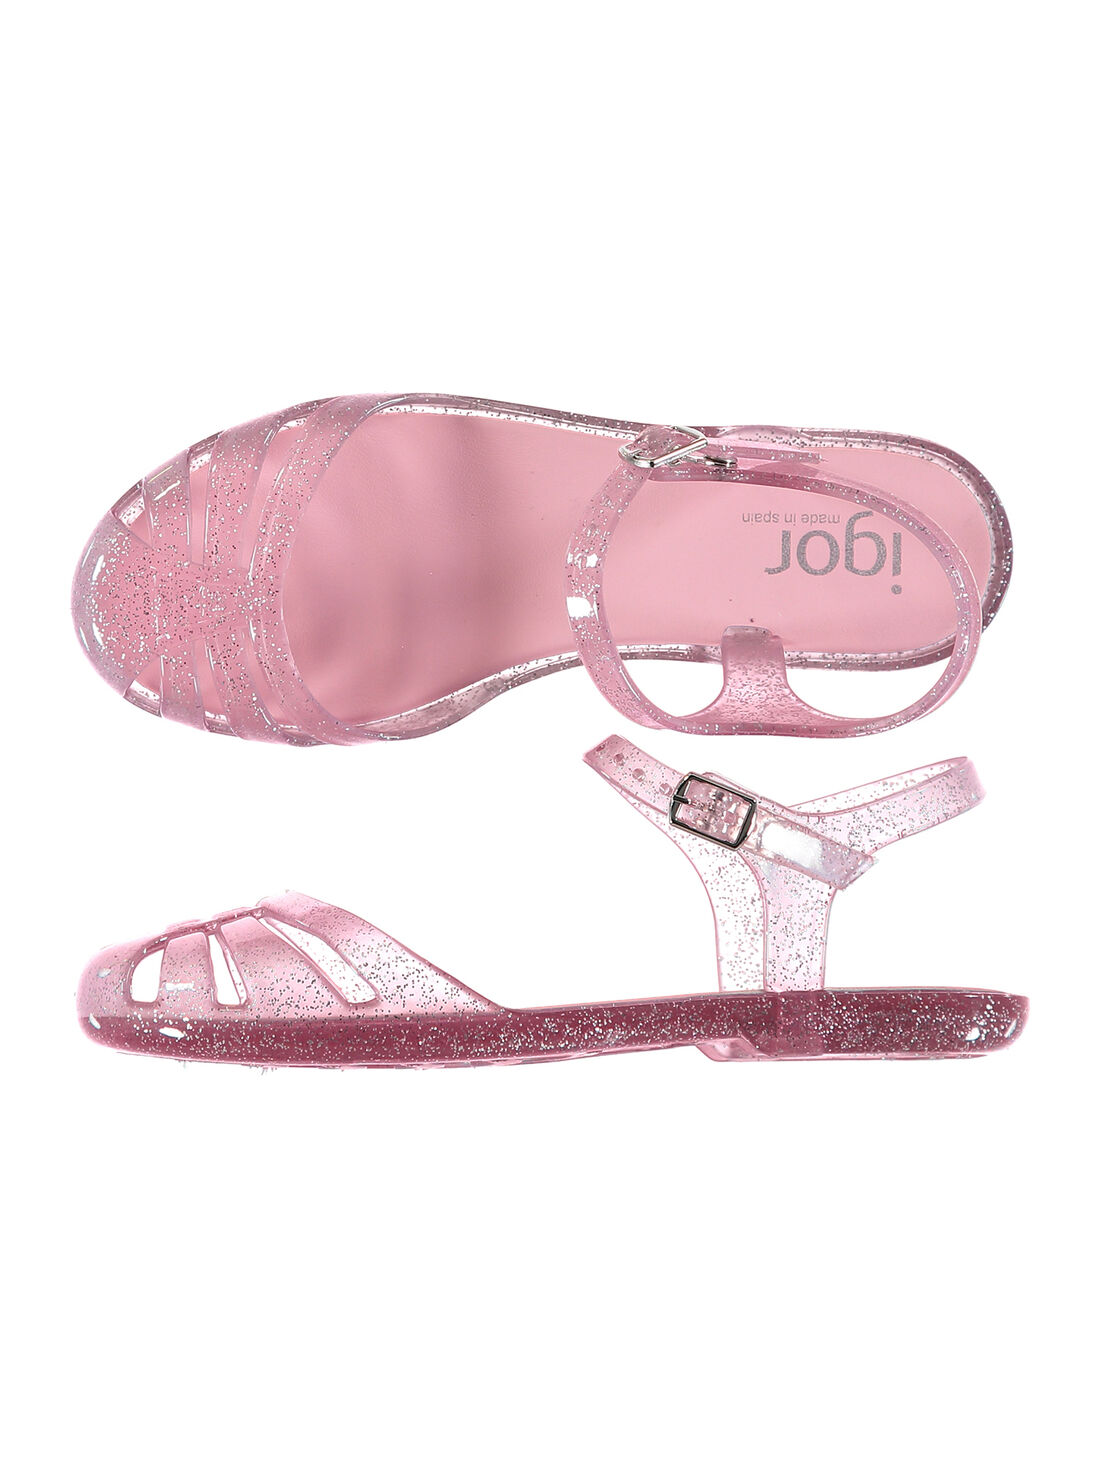 igor jelly shoes sale